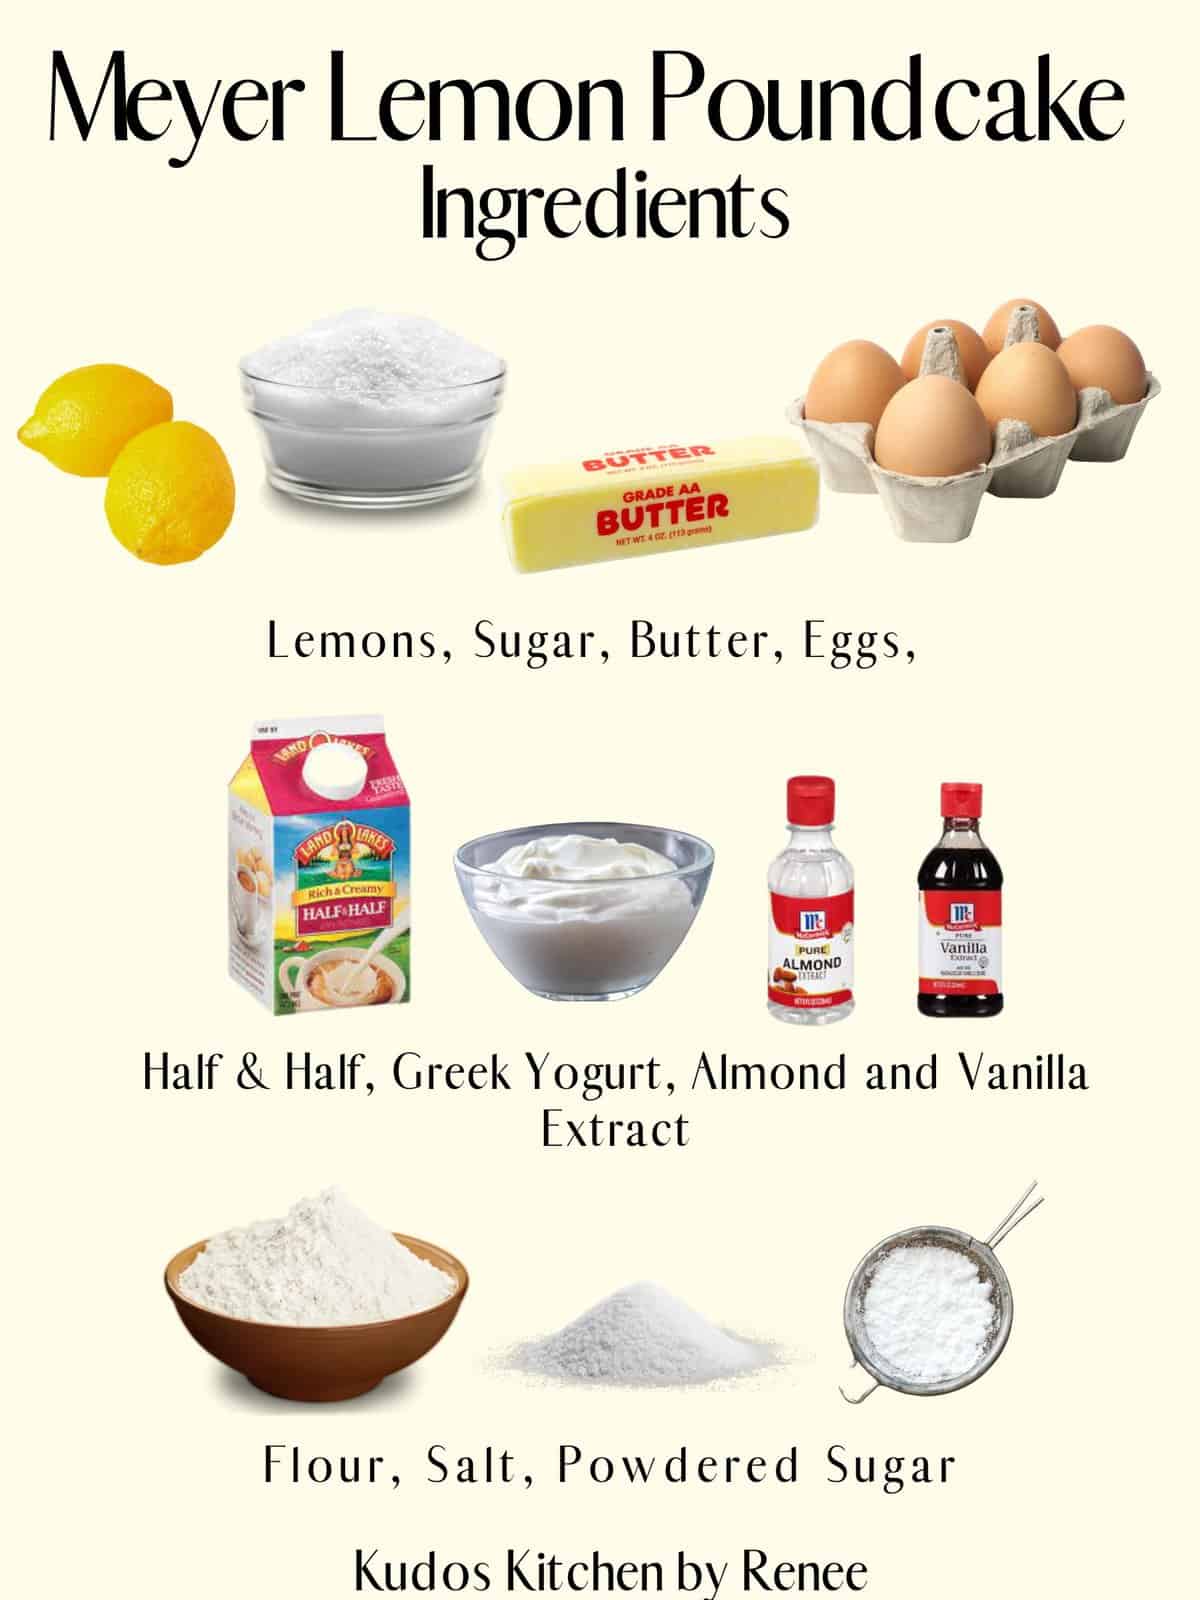 A visual ingredient list for making Meyer lemon pound cake.